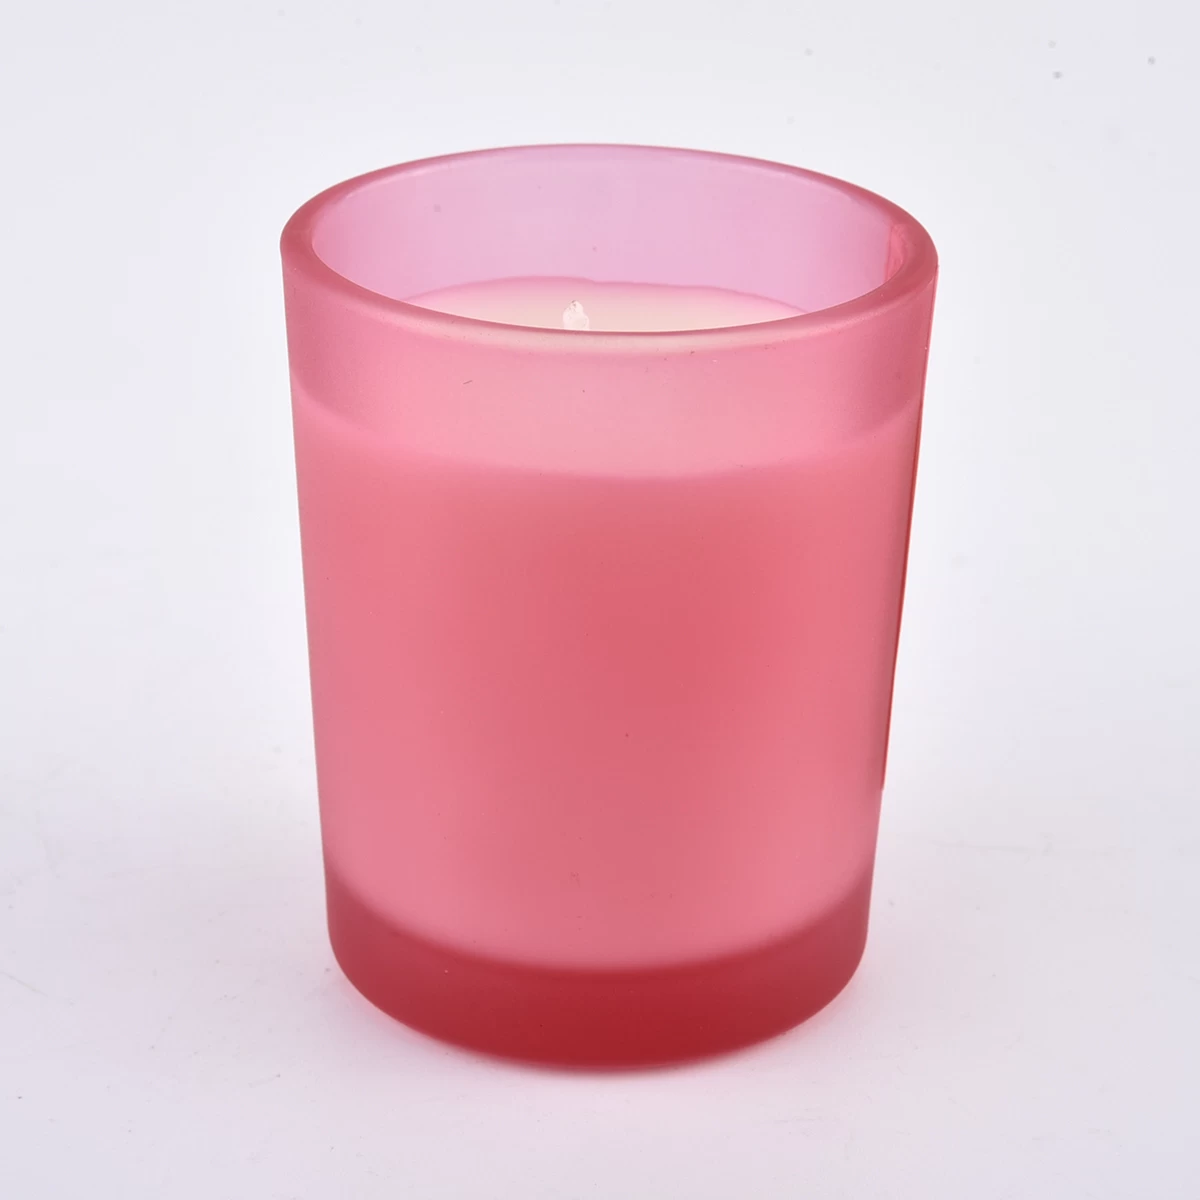 Purple glass candle jar